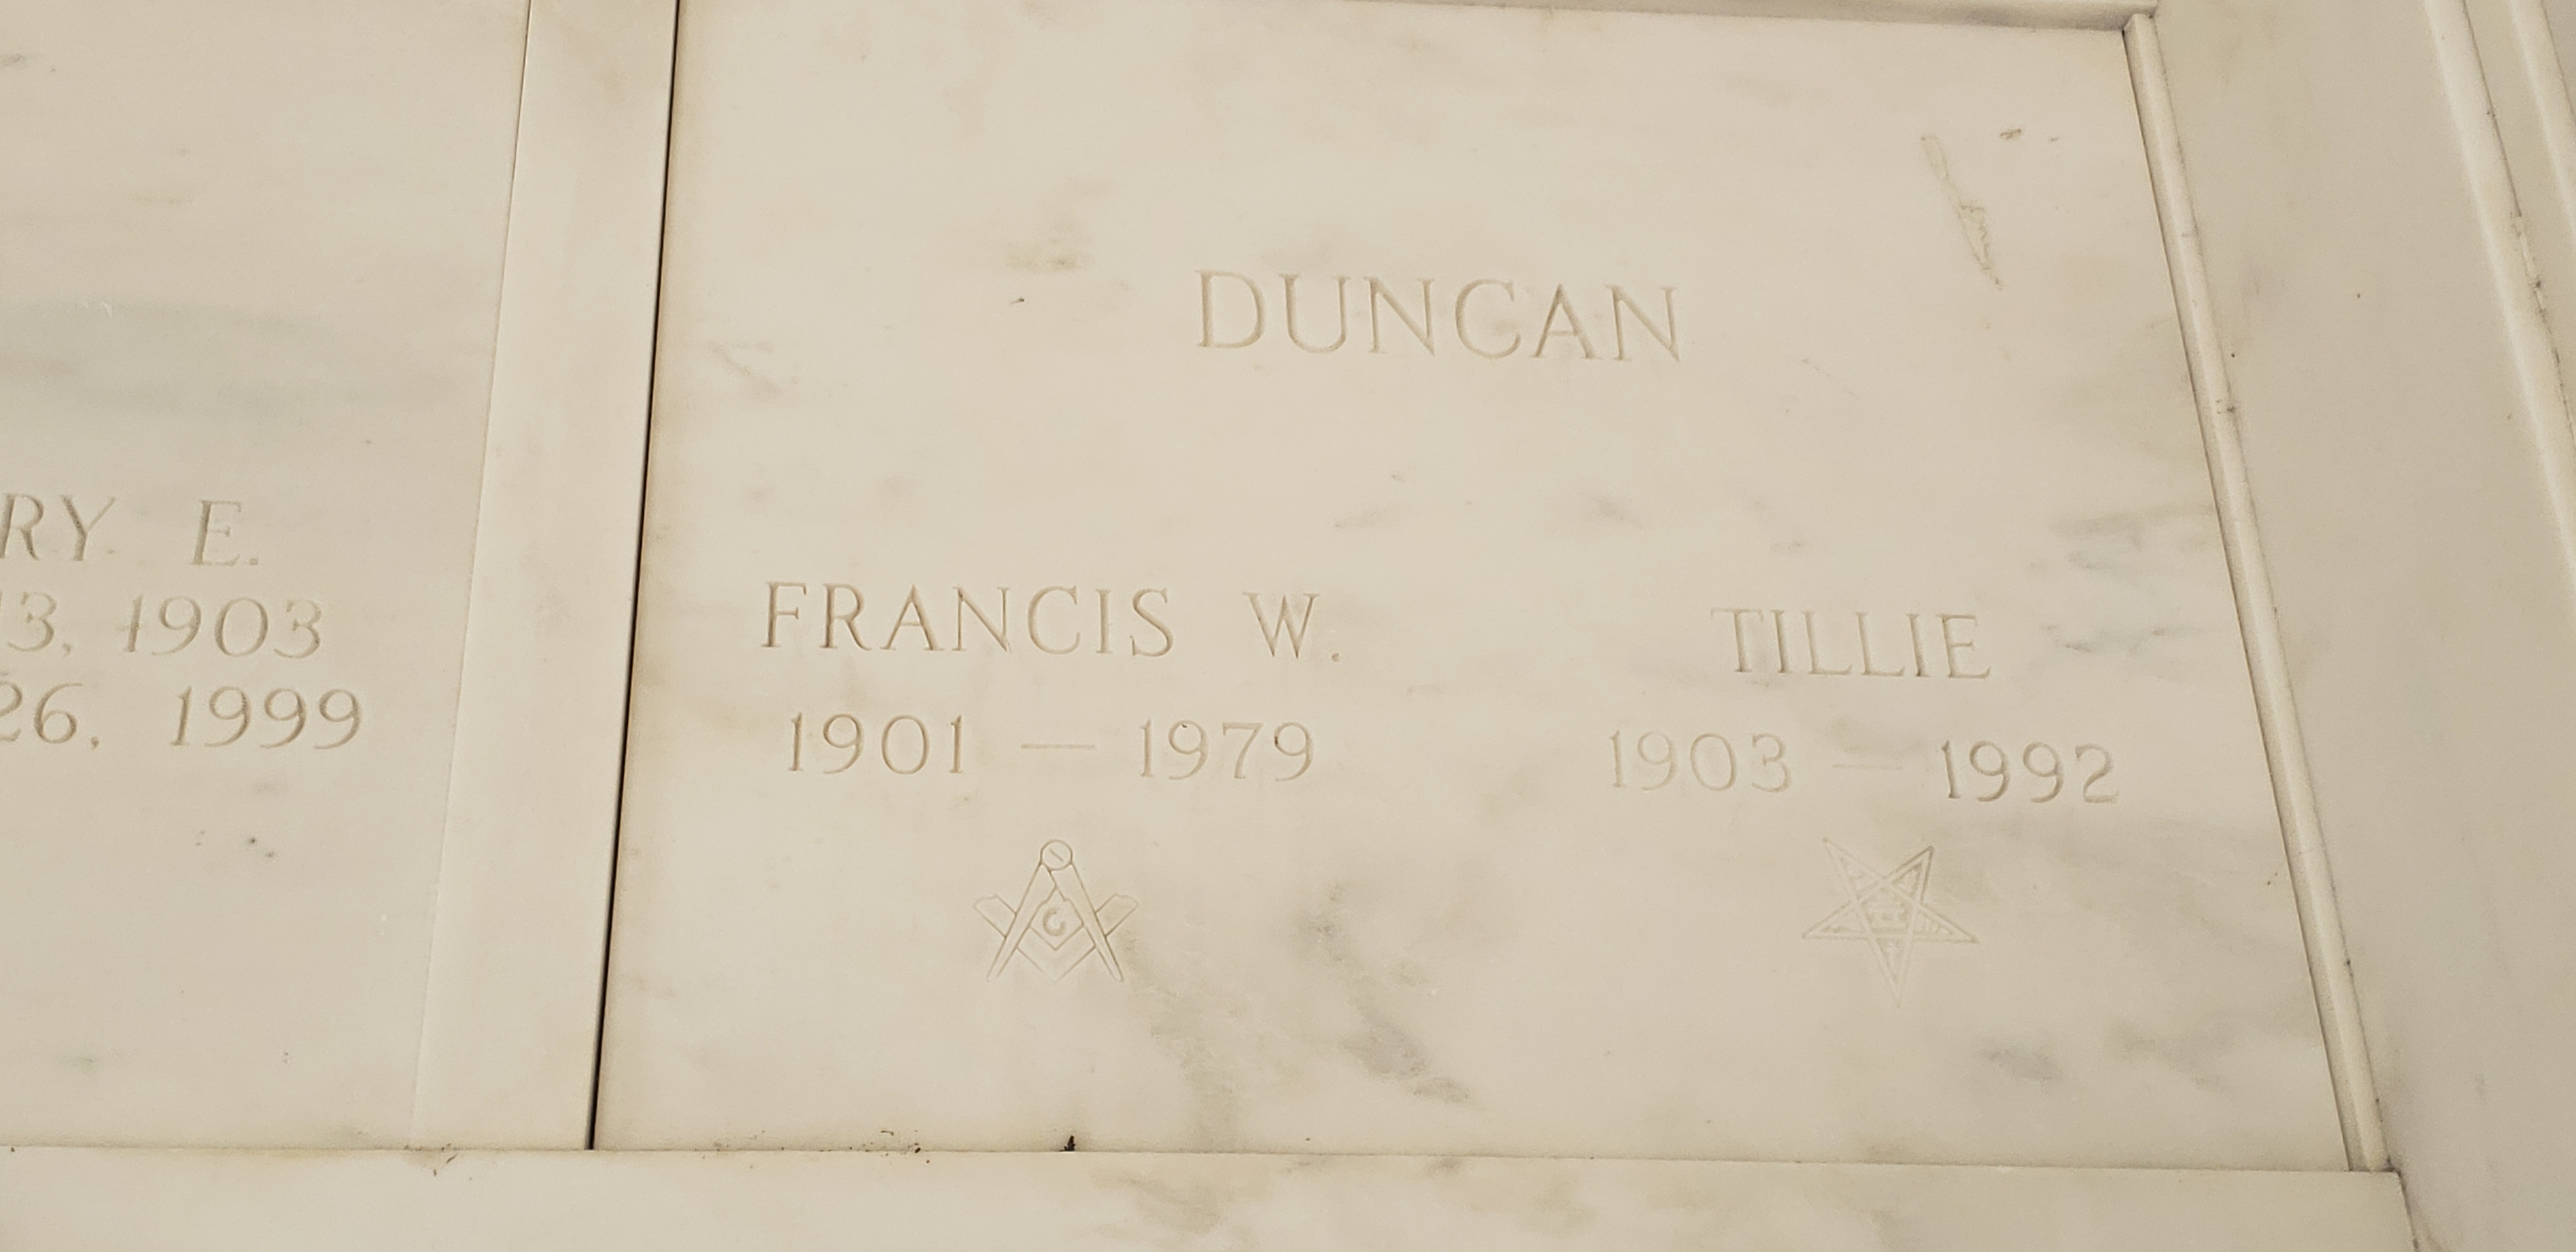 Francis W Duncan